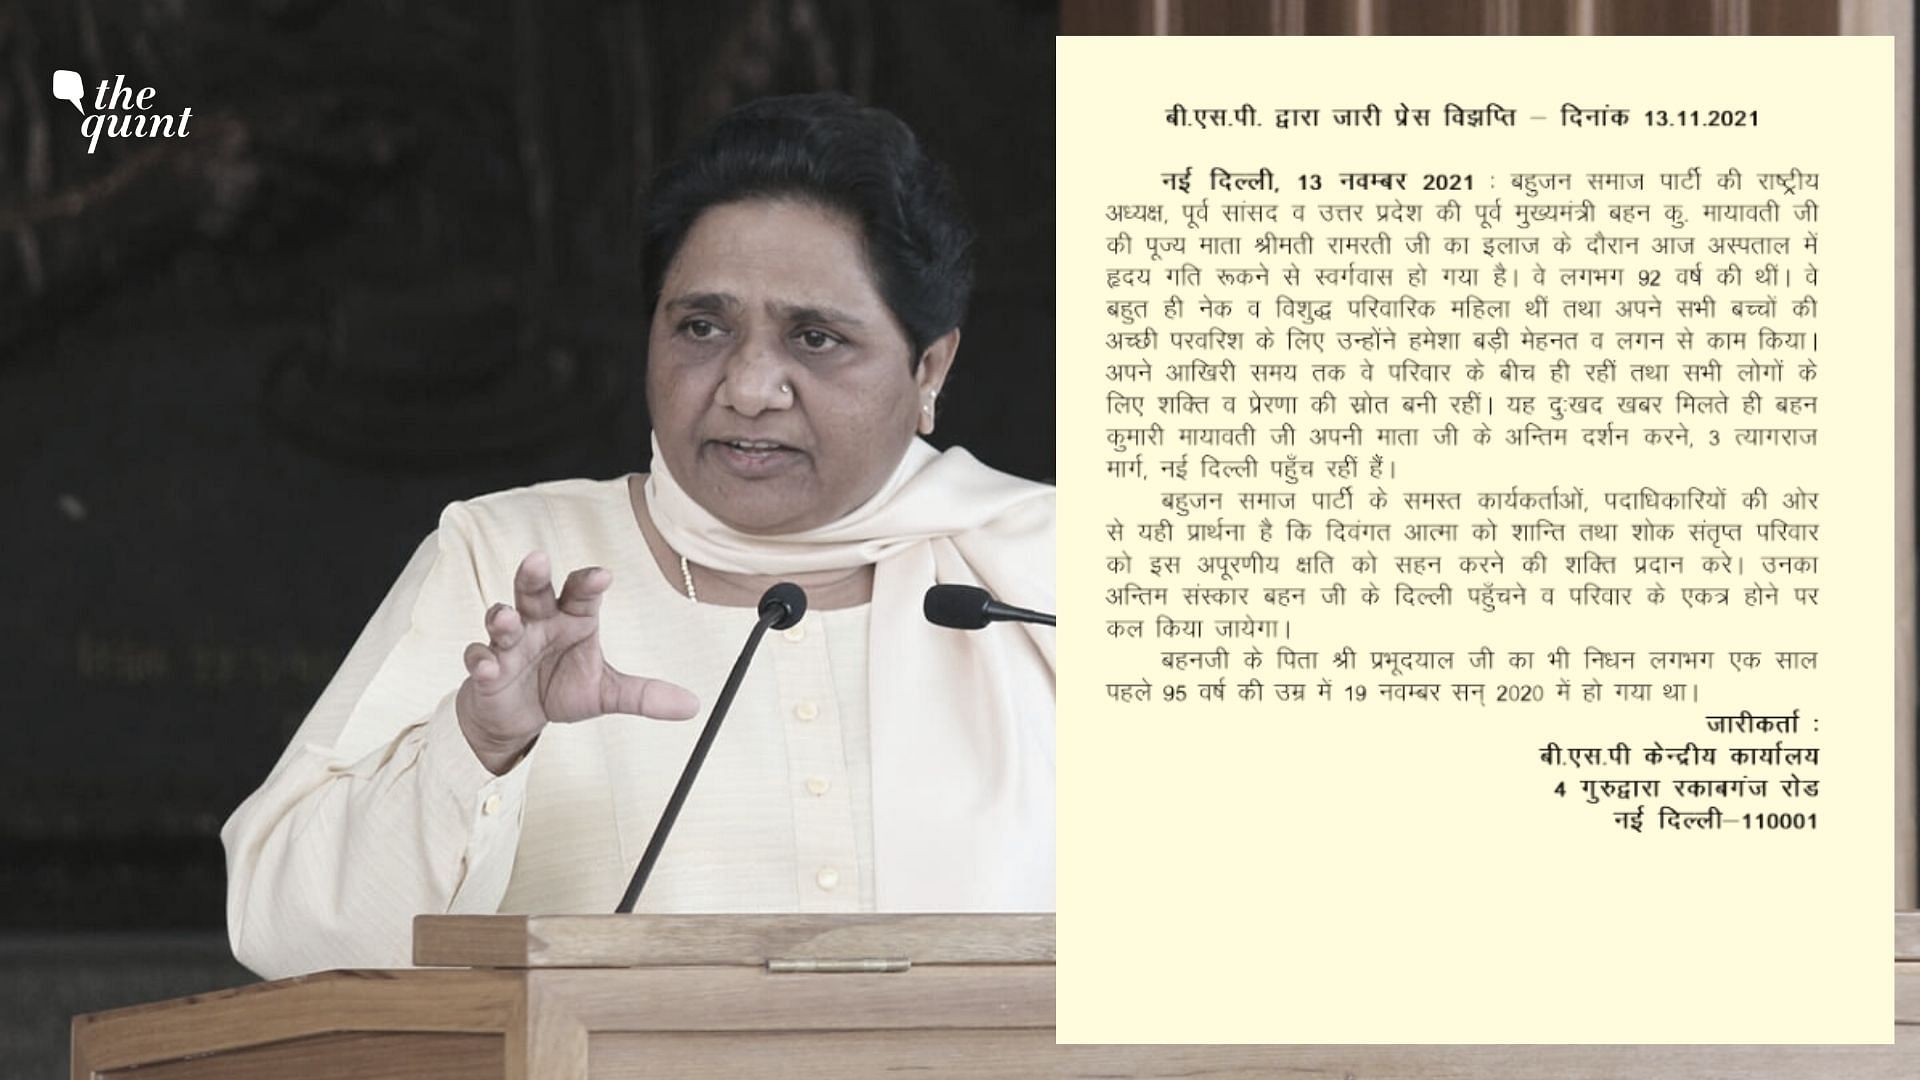 <div class="paragraphs"><p>Bahujan Samaj Party (BSP) national president Mayawati’s mother Ramrati passed away on Saturday, 13 November. <br></p></div>